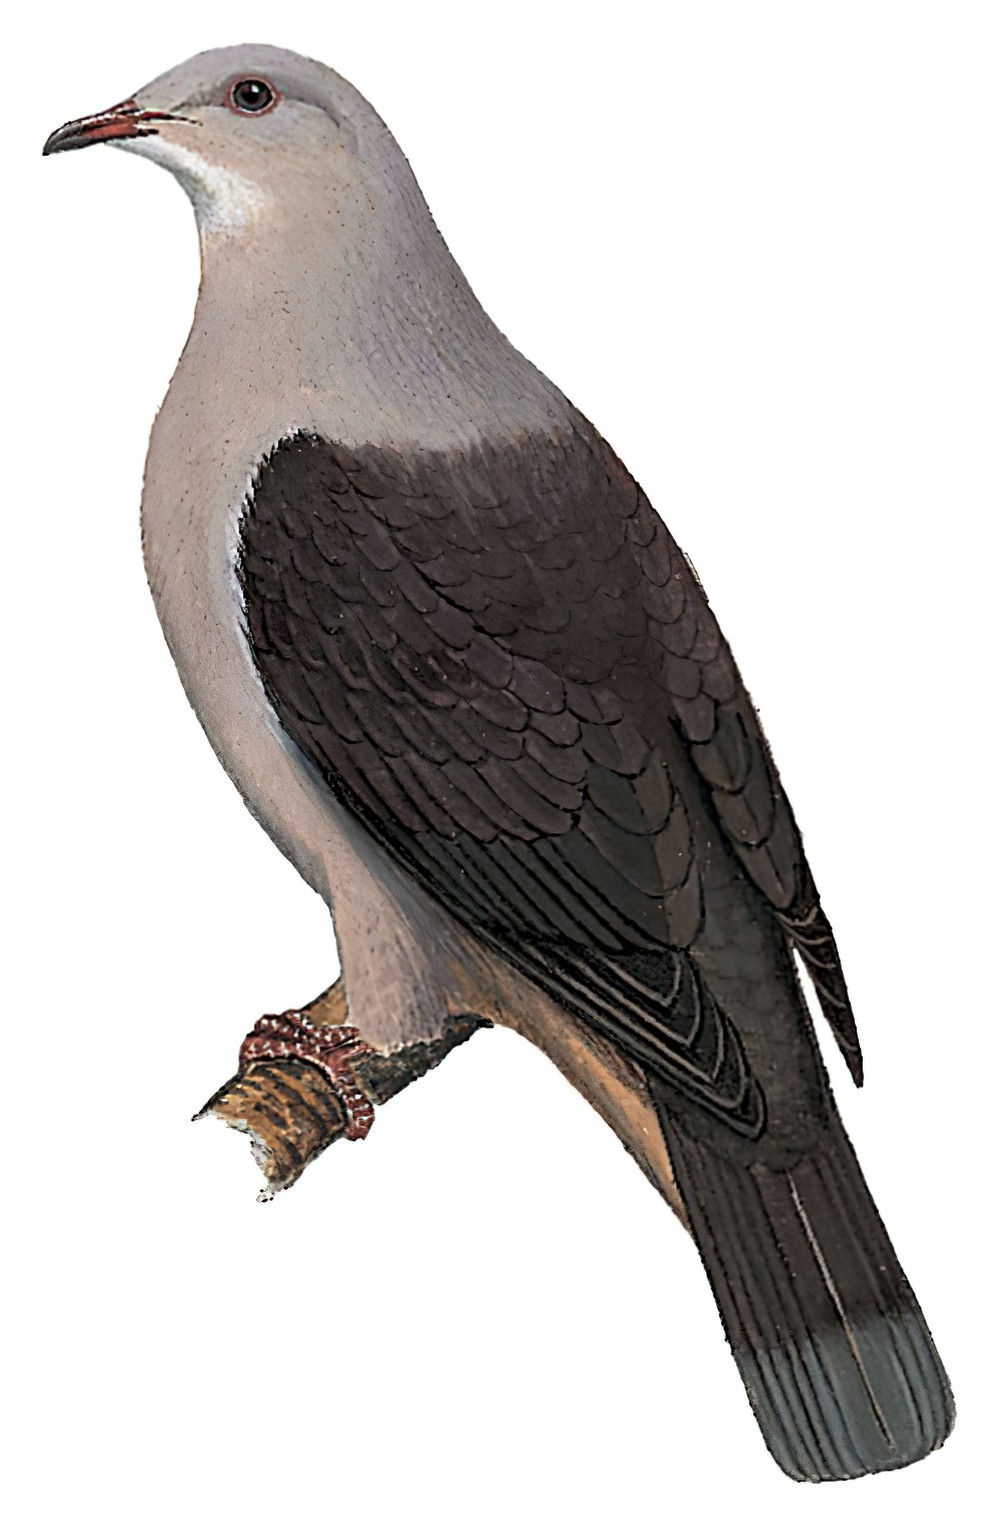 Mountain Imperial-Pigeon / Ducula badia